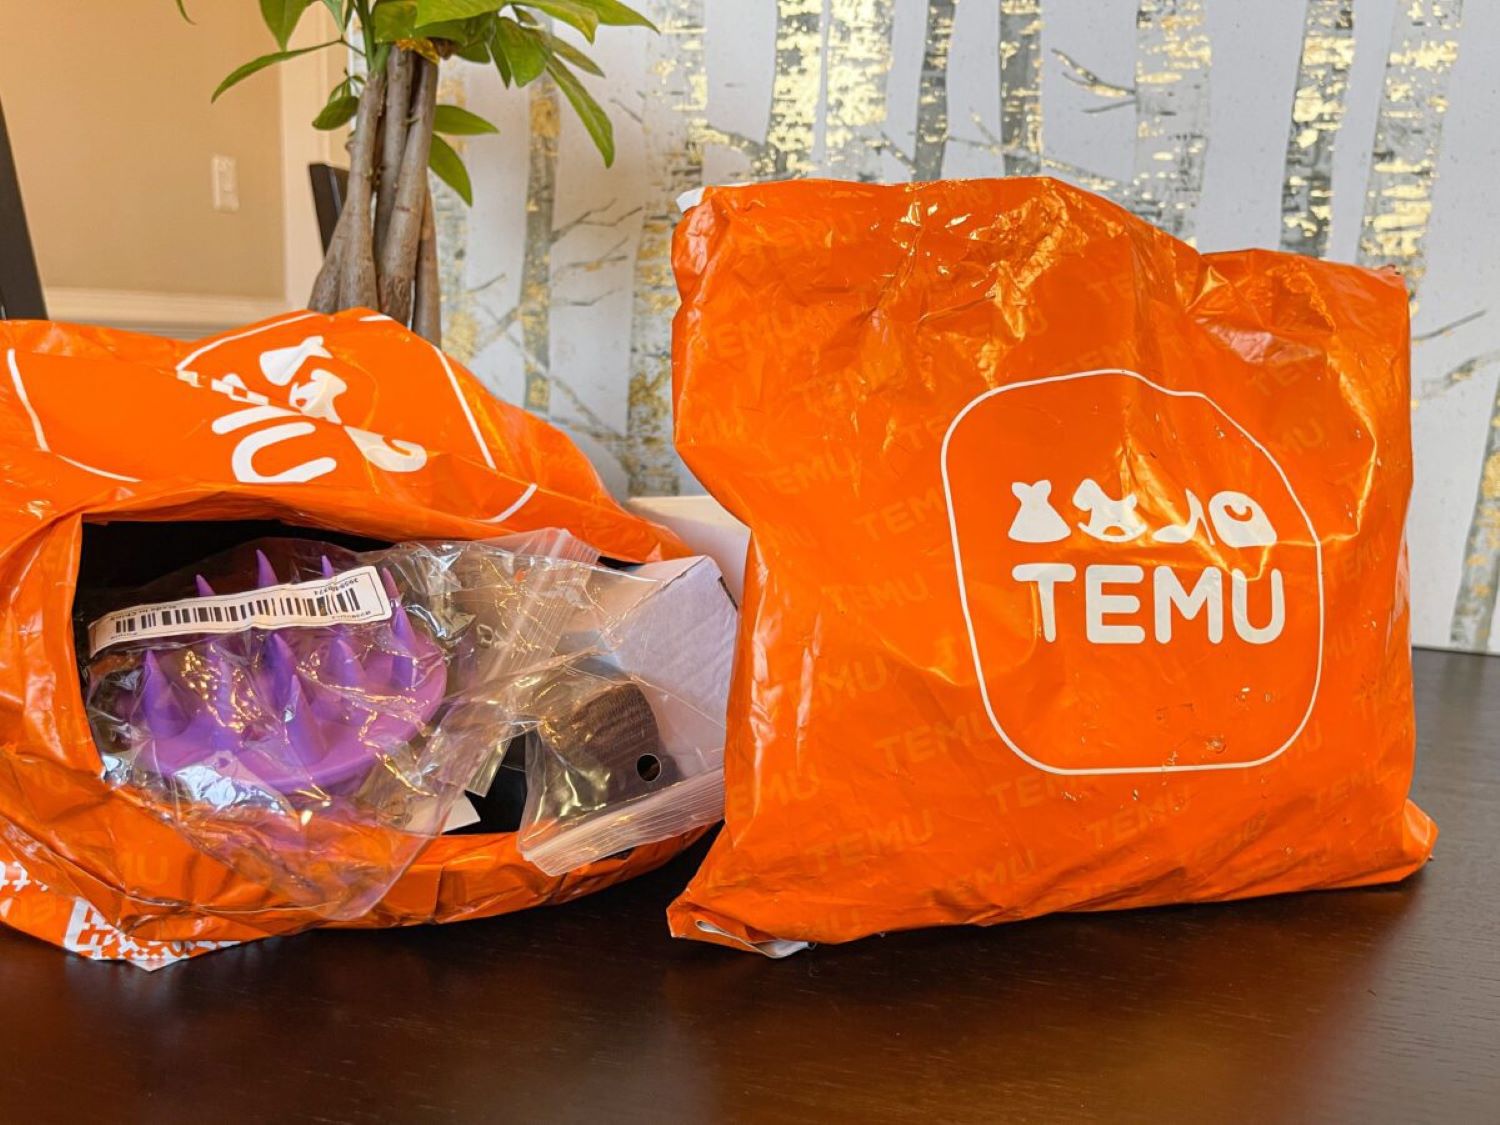 Temu plastic bags and goods